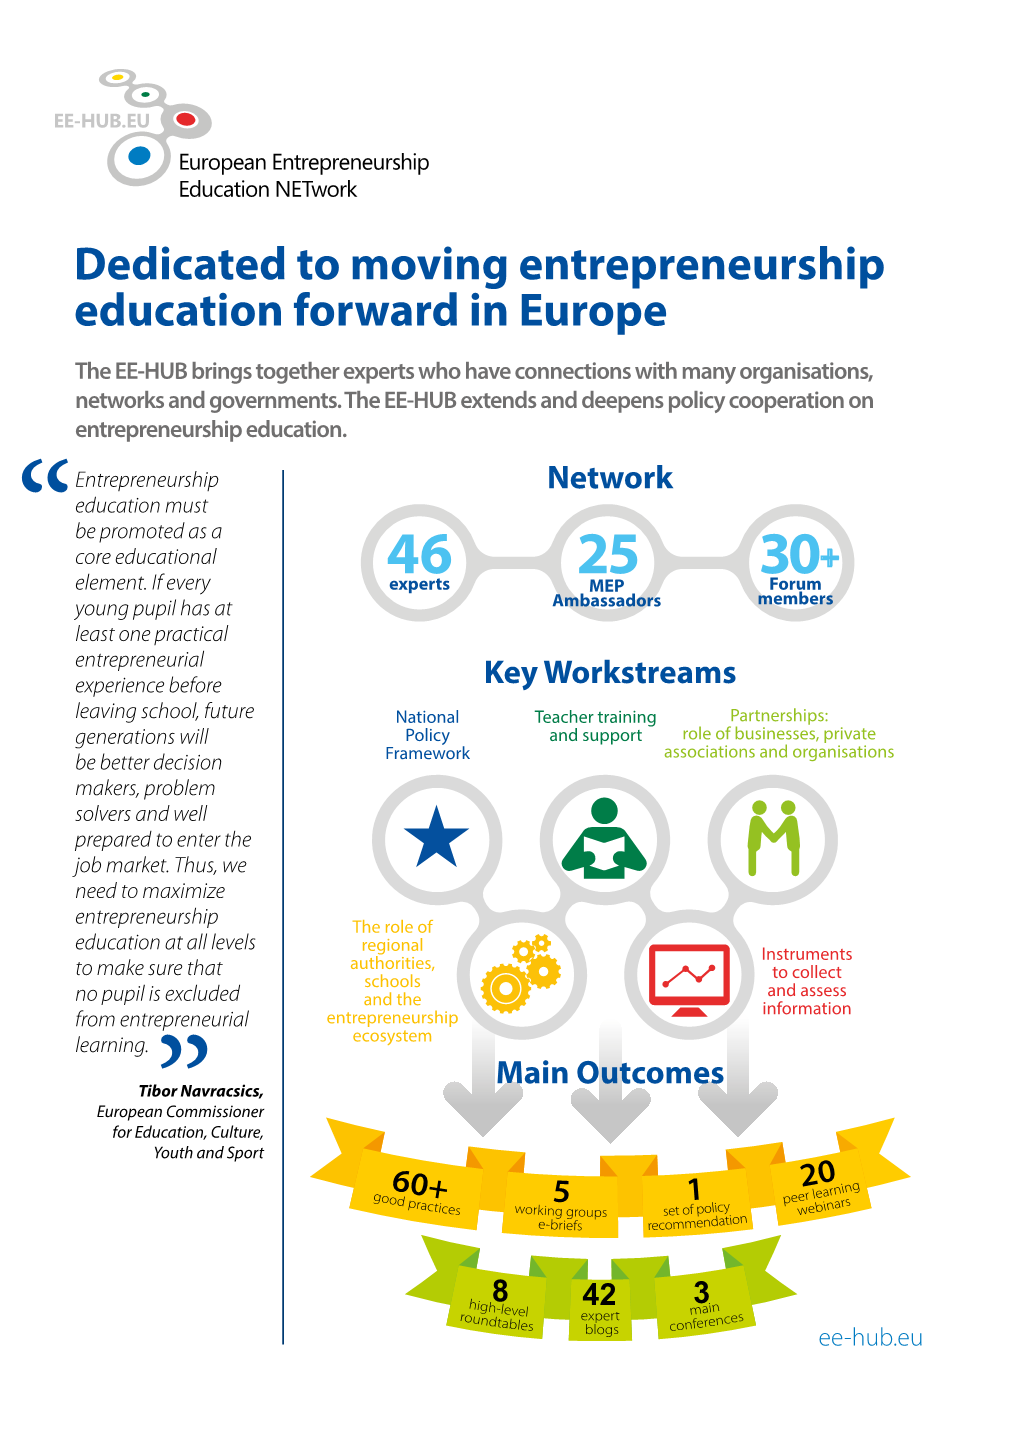 Dedicated to Moving Entrepreneurship Education Forward in Europe